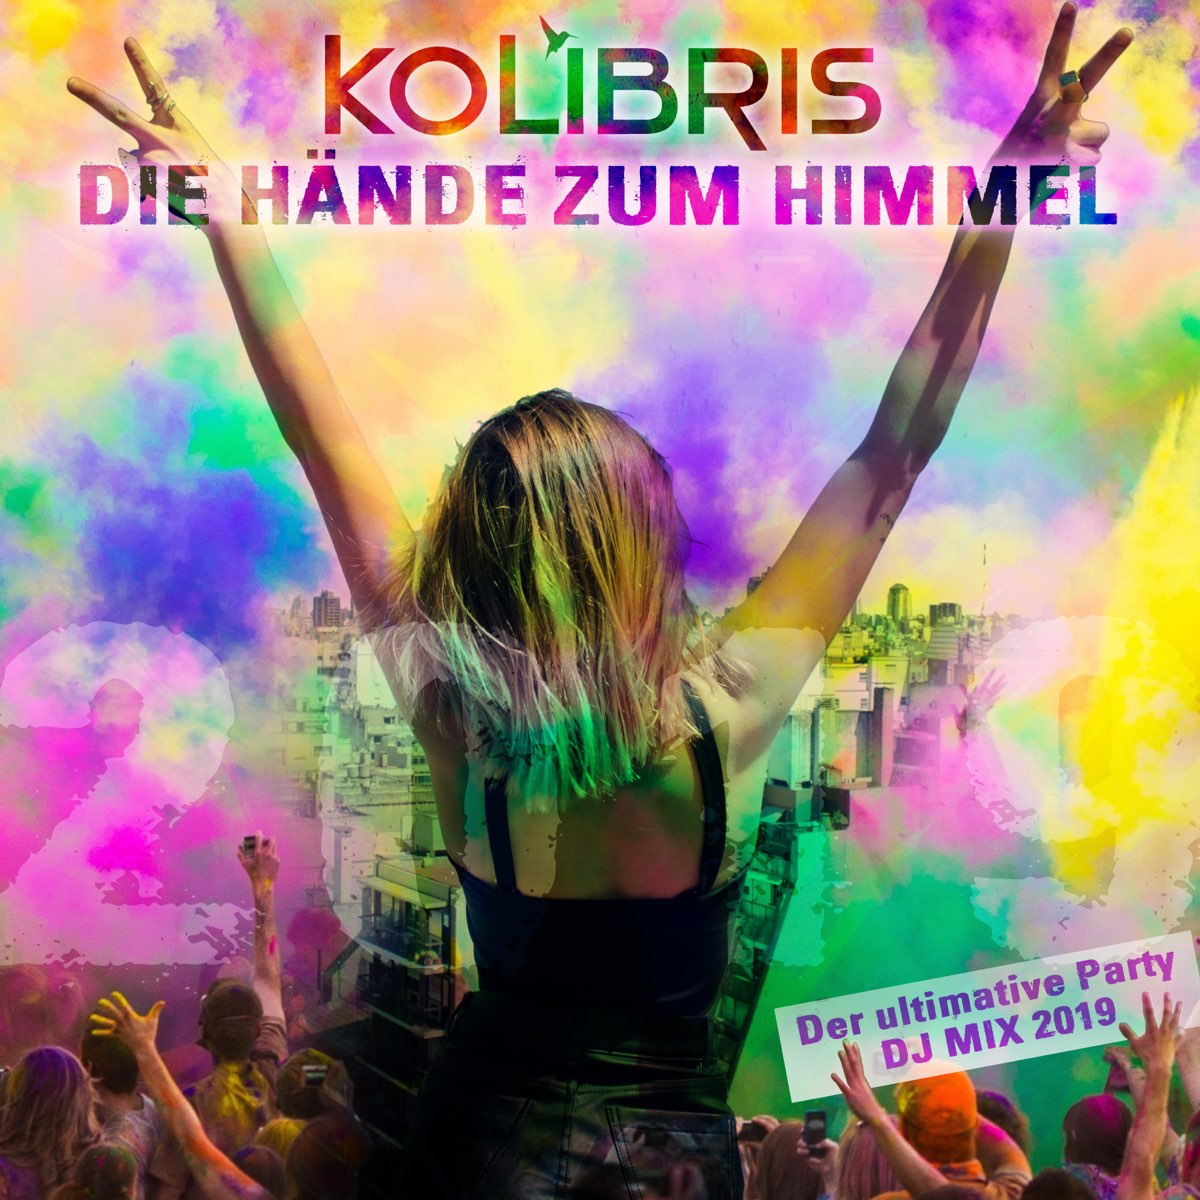 Hände zum Himmel 2019 - Single by Kolibris on Apple Music